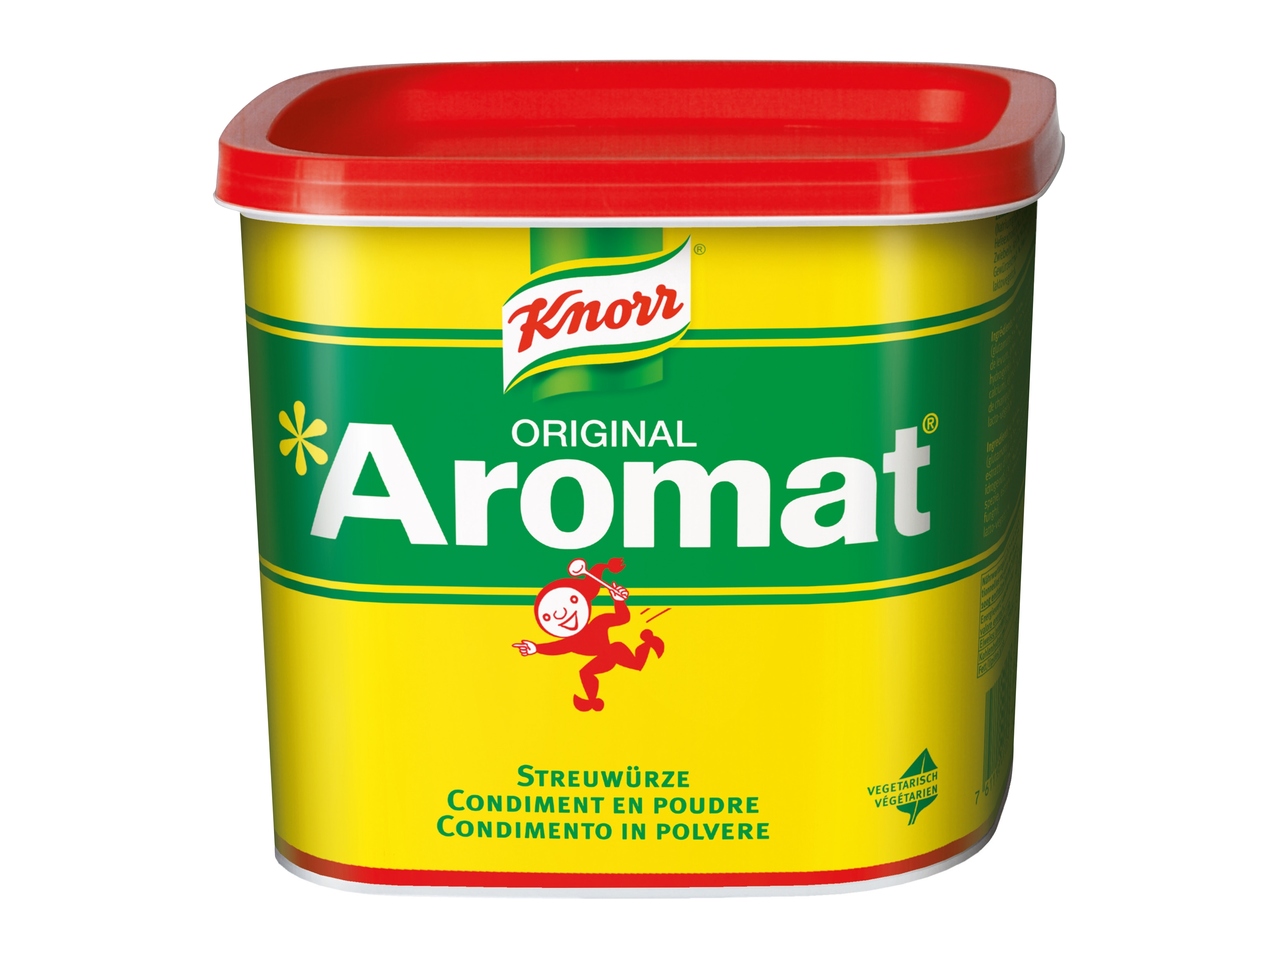 Aromat Knorr